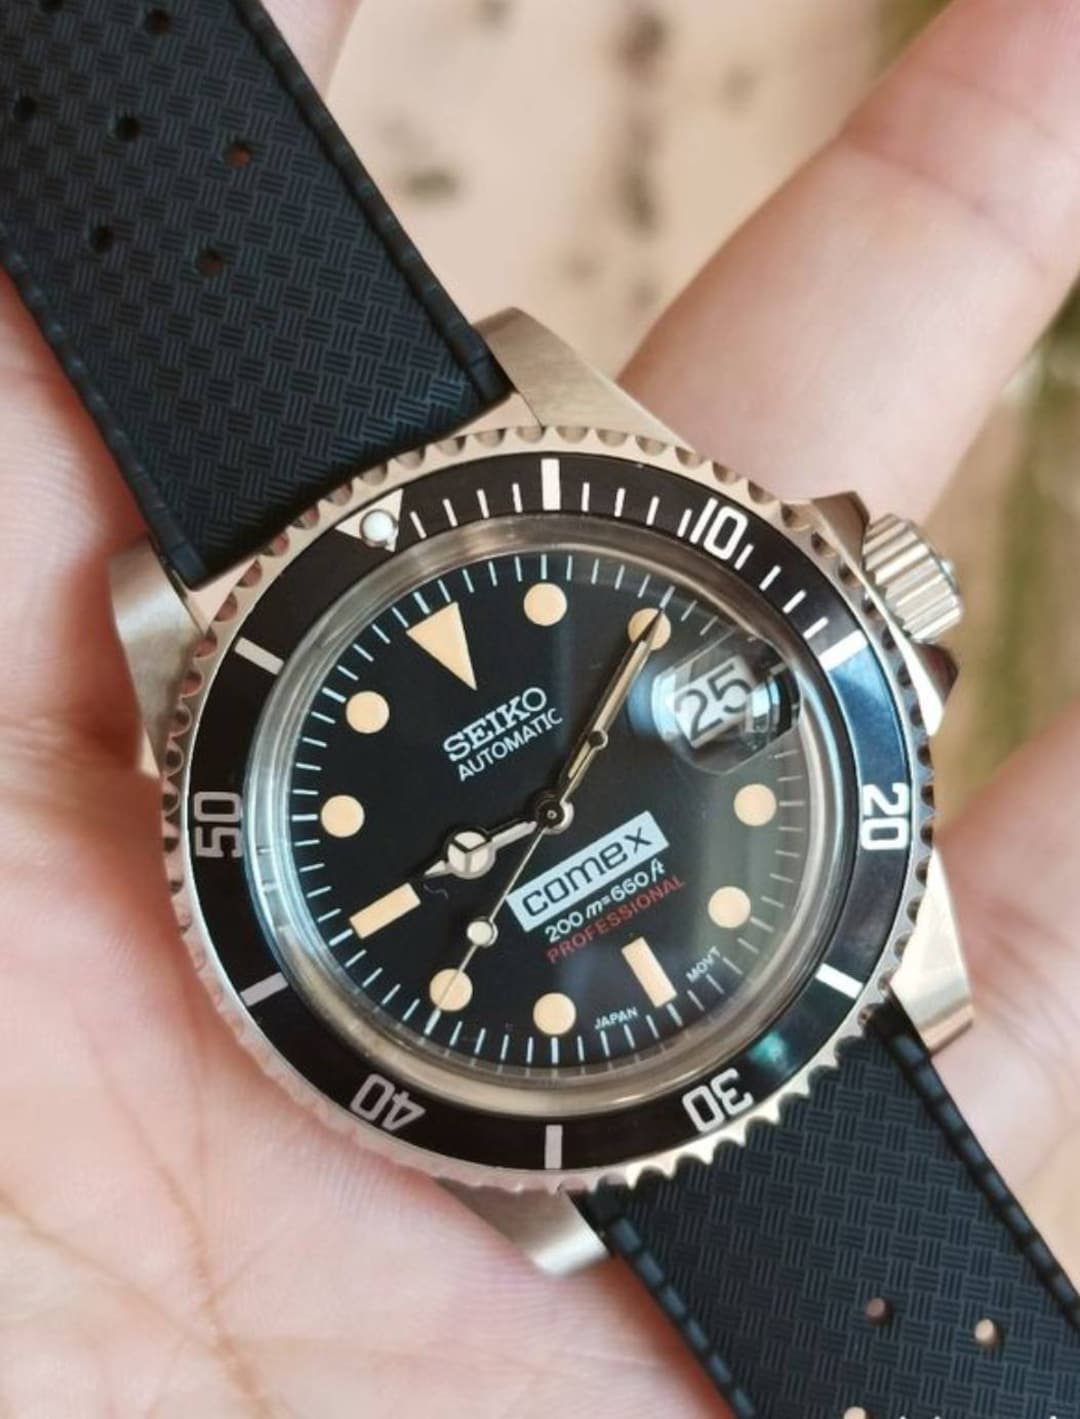 Seiko Mod Submariner Comex Tribute 1680 Vintage Diver - Etsy UK